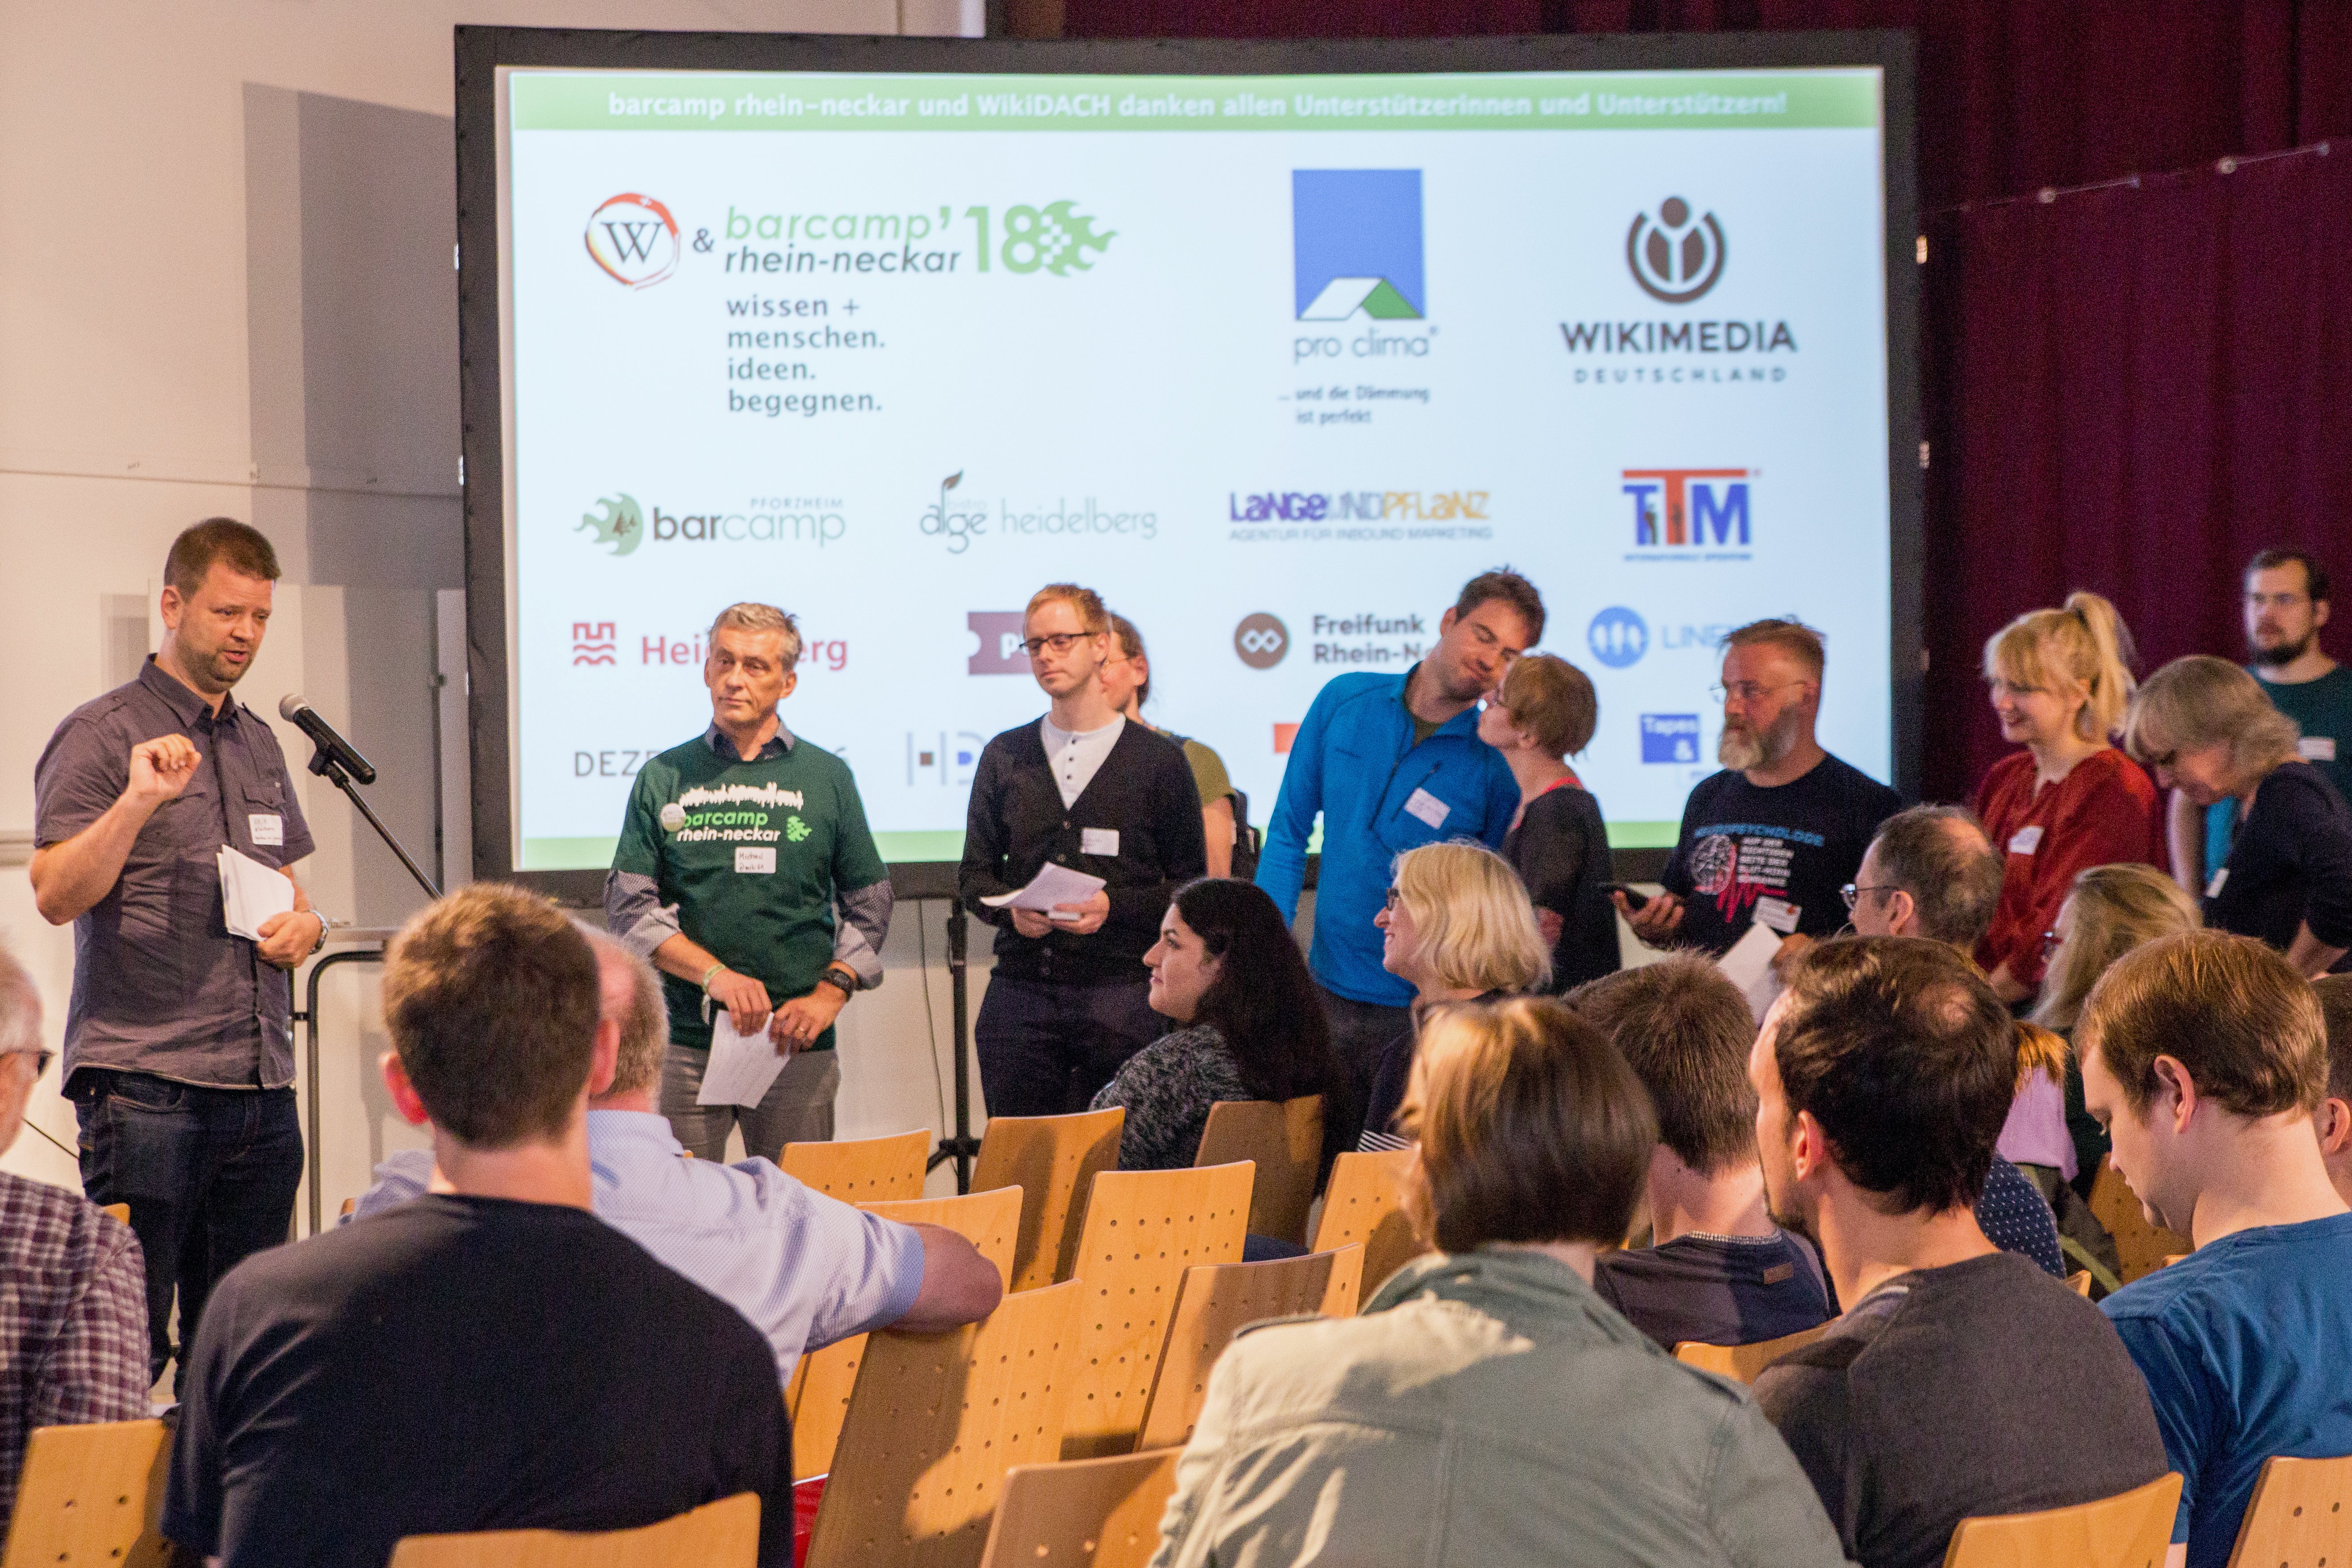 Barcamp-Rhein-Neckar-WikiDach-2018-Heidelberg-Sessionplanung-01.jpg